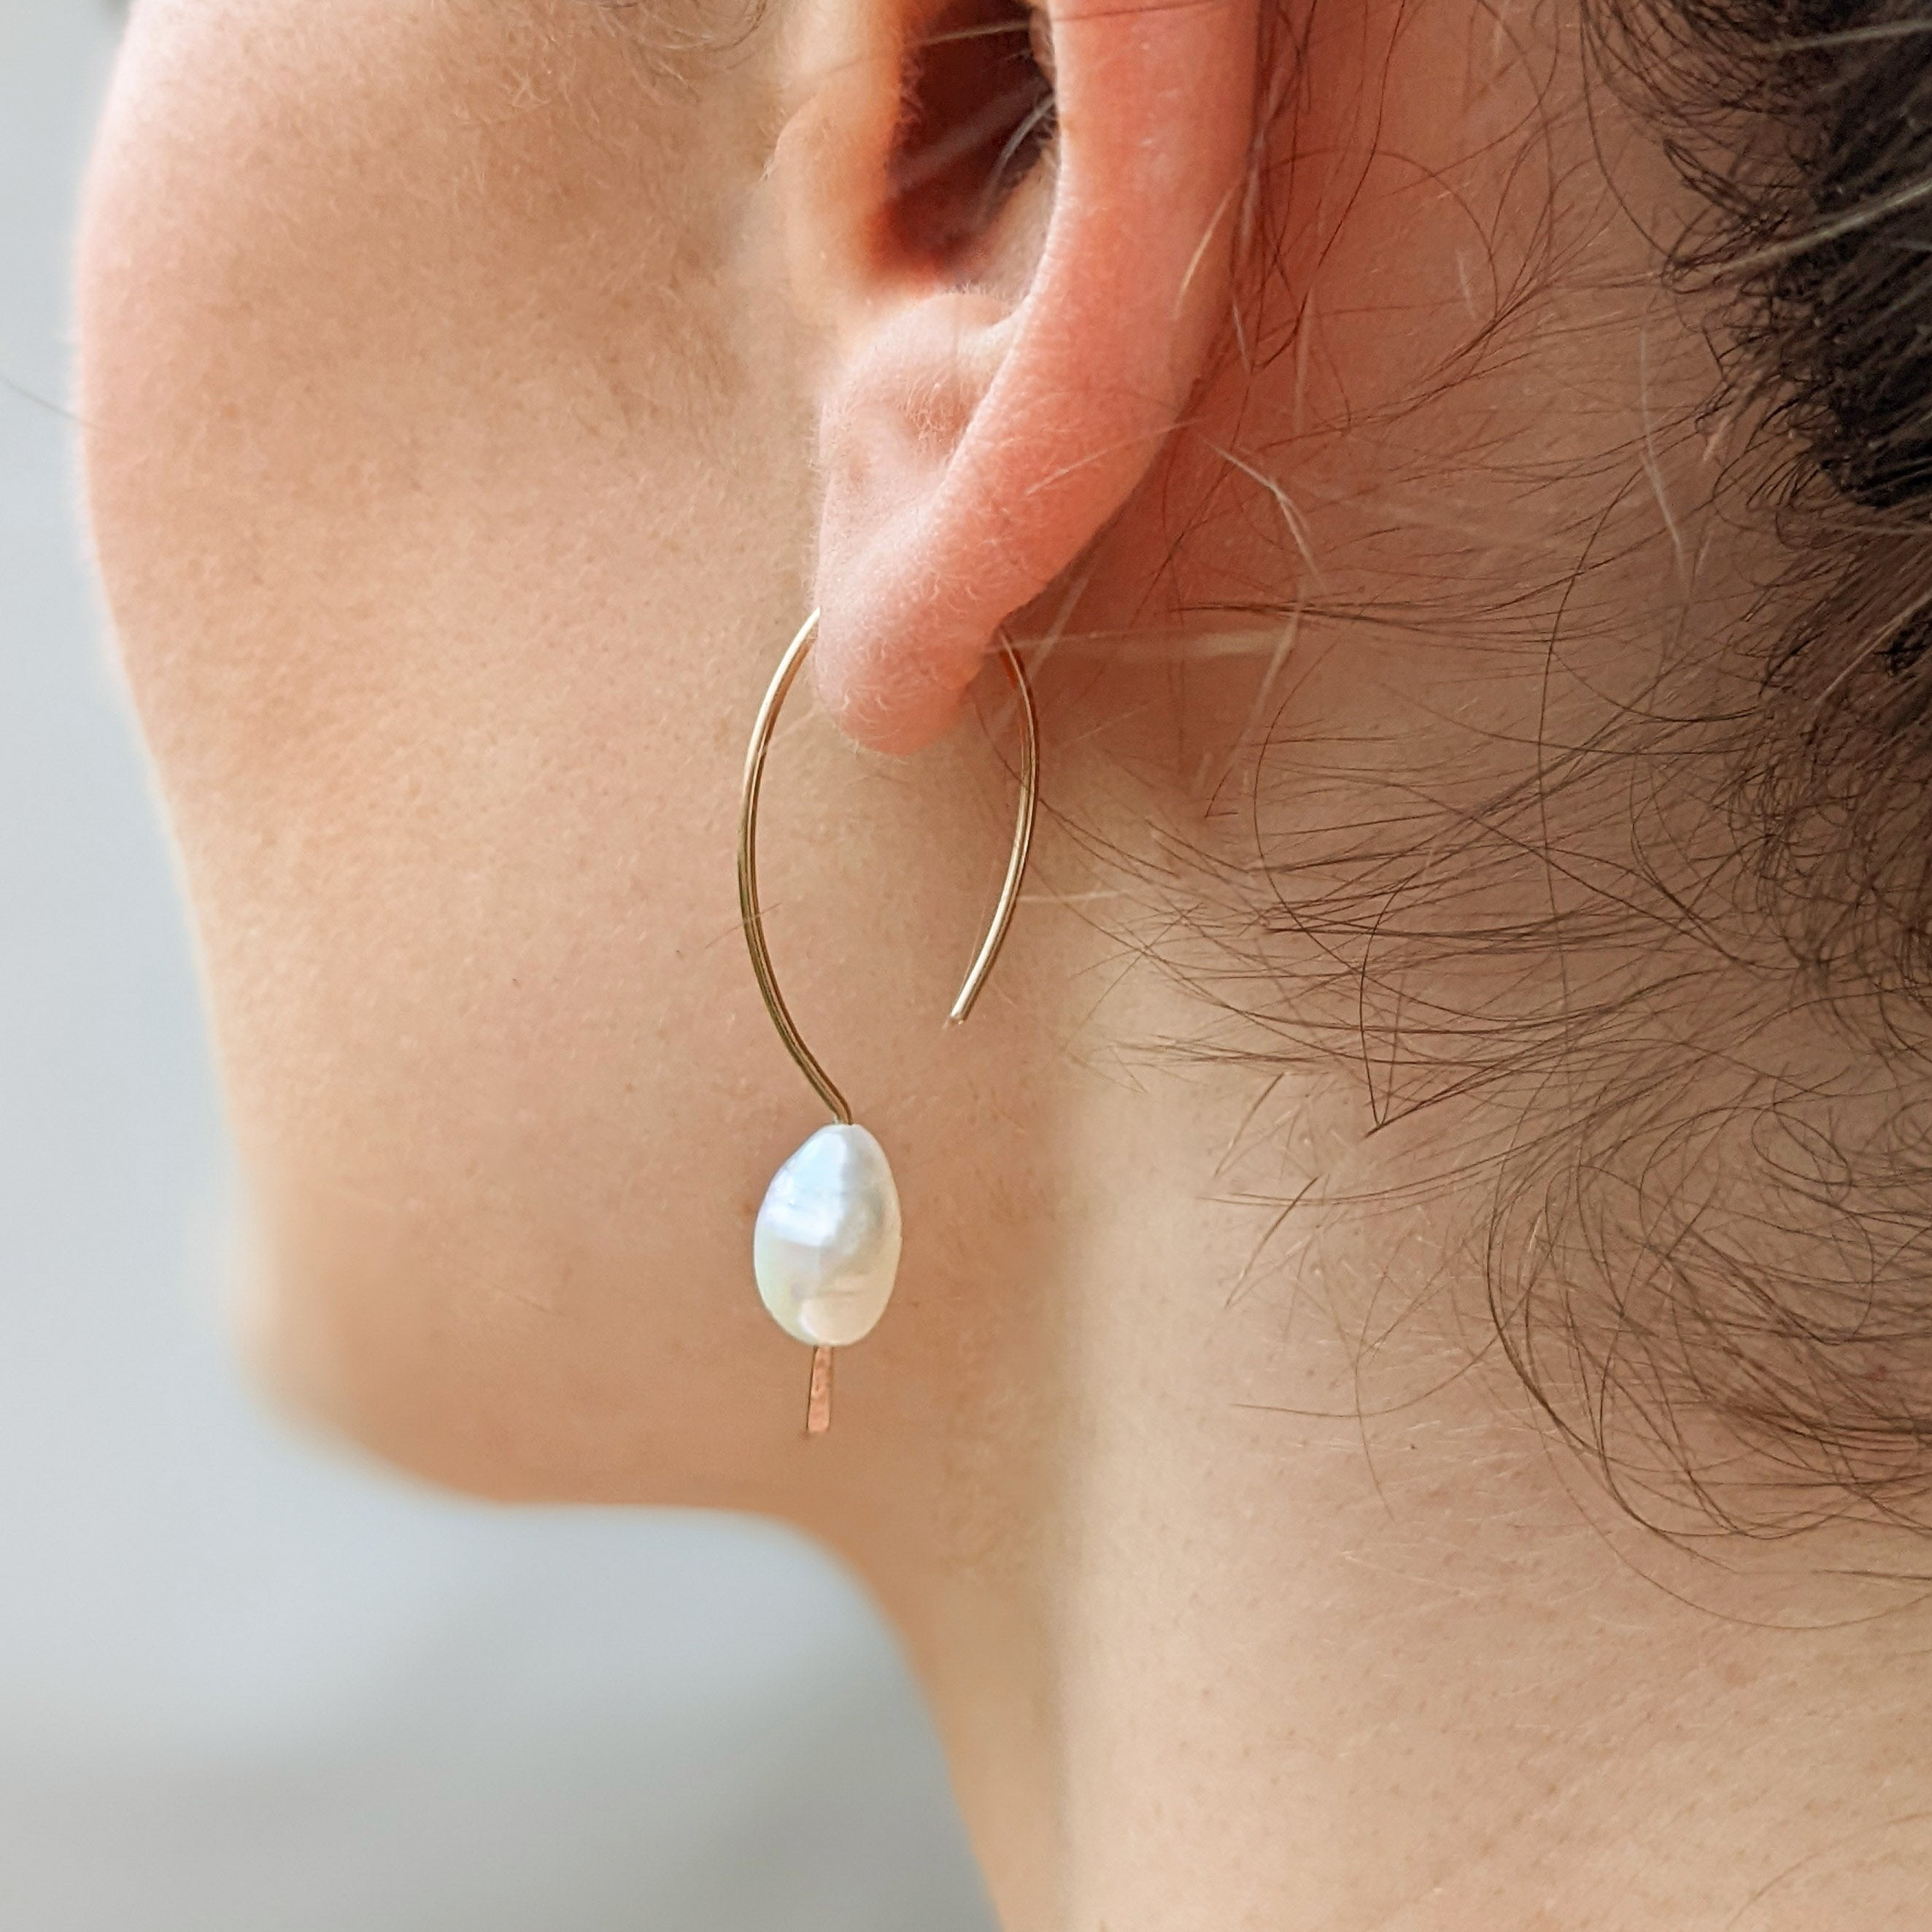 Pearl pull through earrings gold on ear